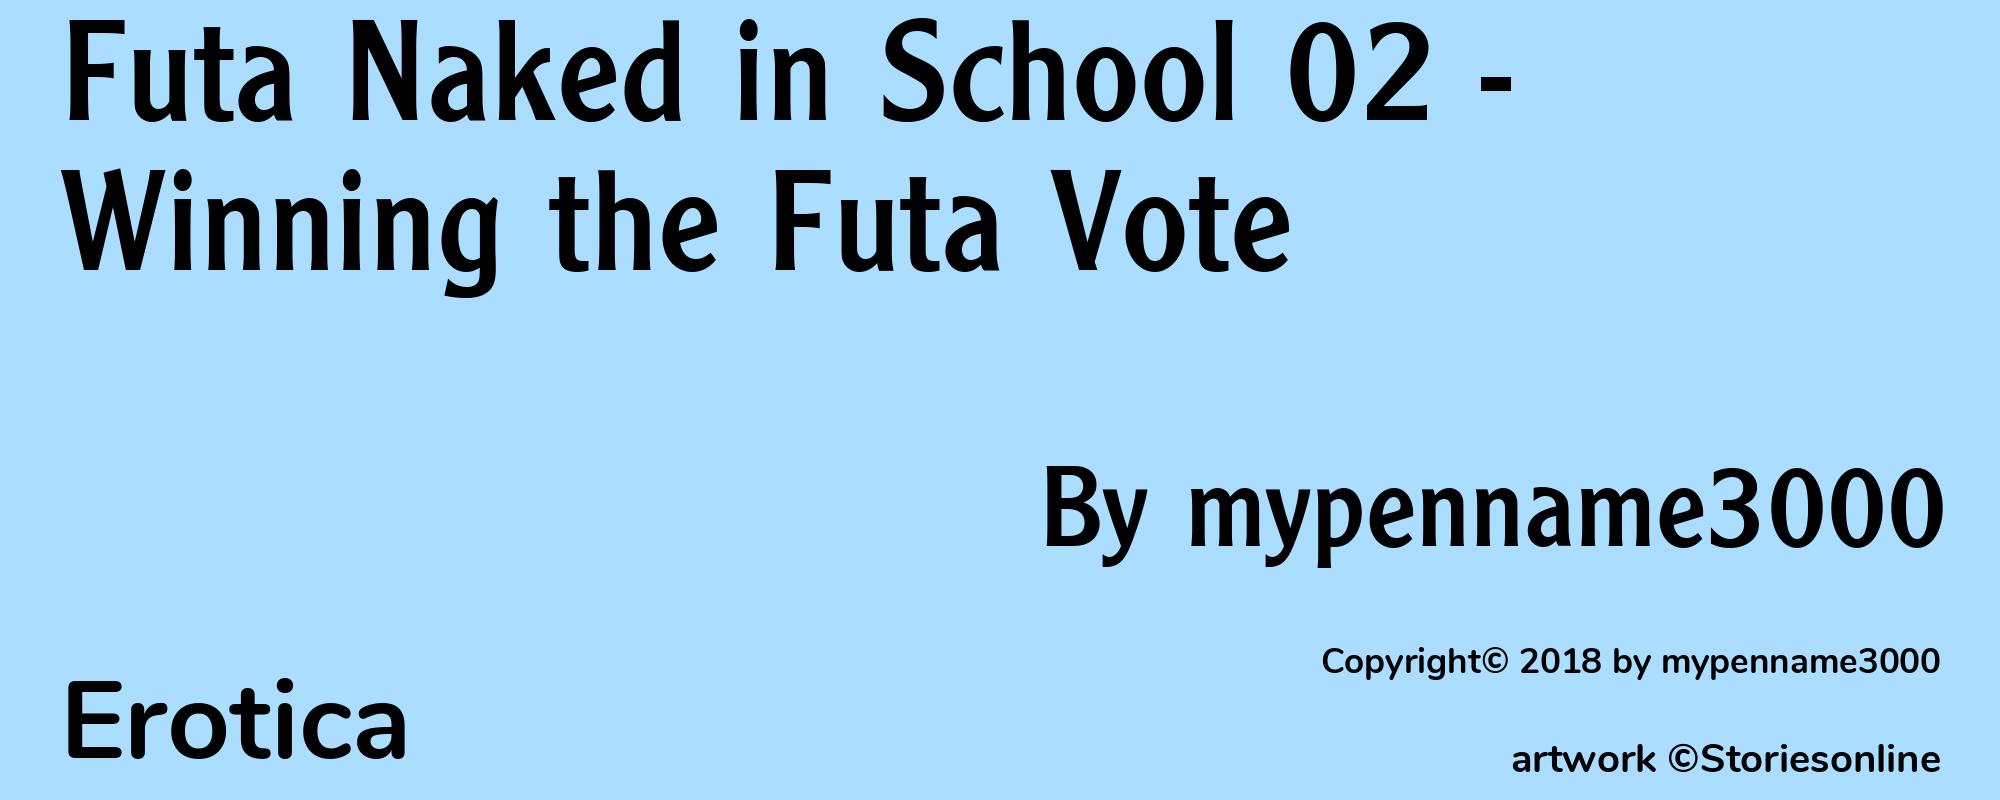 Futa Naked in School 02 - Winning the Futa Vote - Cover